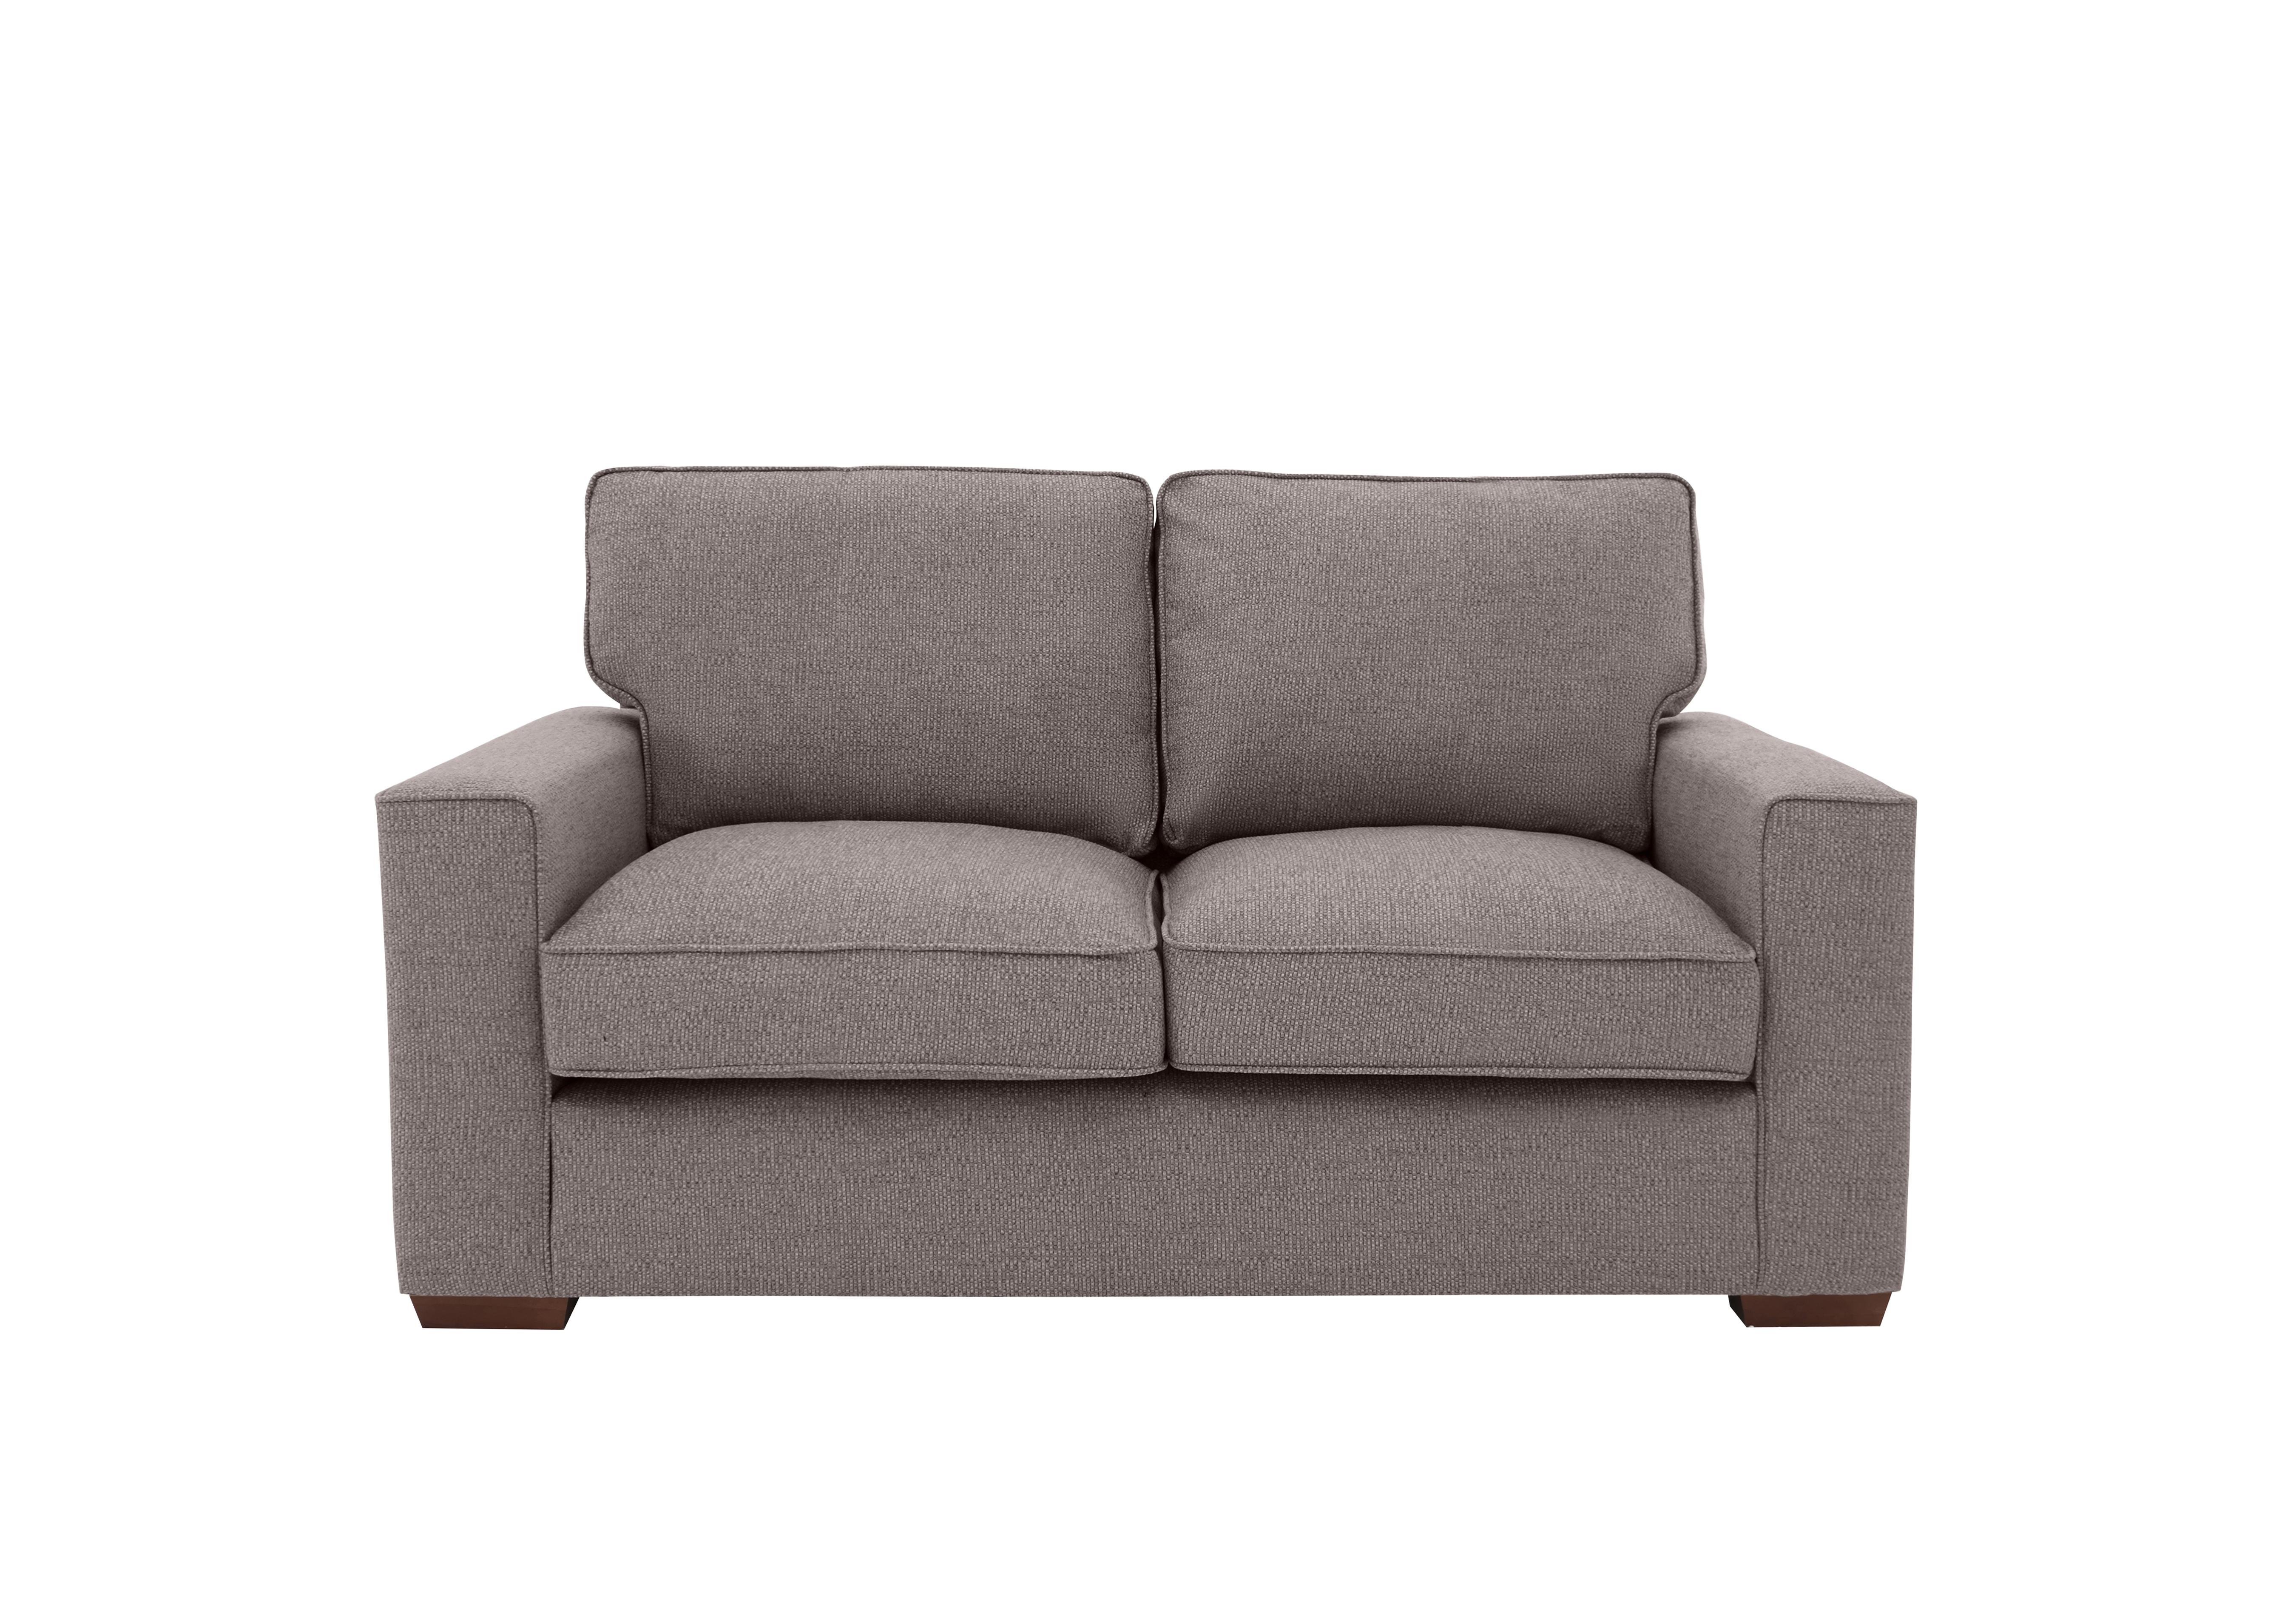 Cory 2 Seater Fabric Classic Back Sofa in Dallas Taupe on Furniture Village